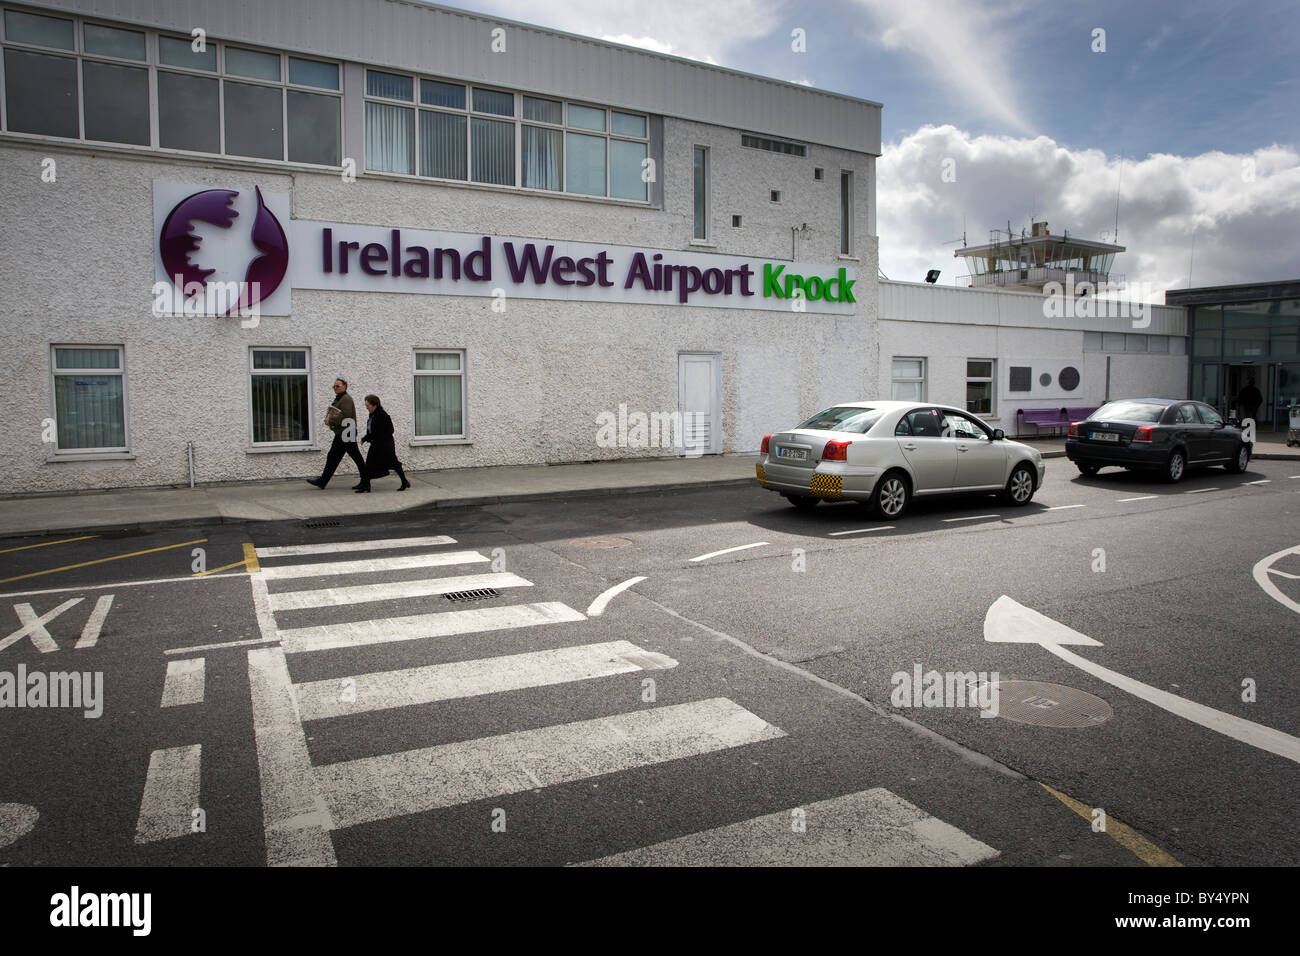 Ireland West Airport Knock, Eire Stock Photo